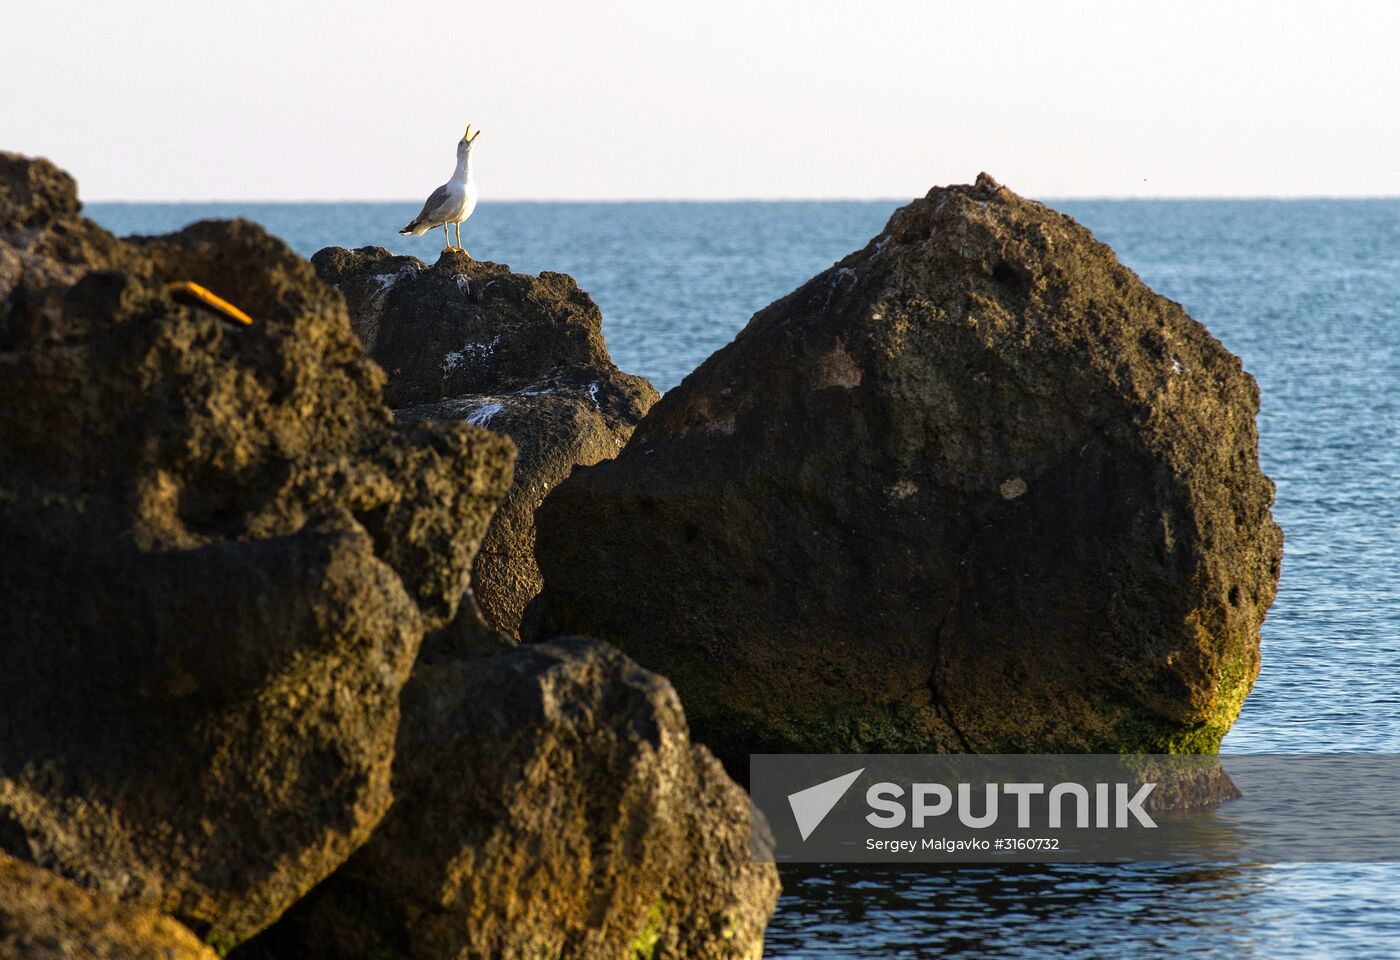 Vacation on Sea of Azov in Crimea